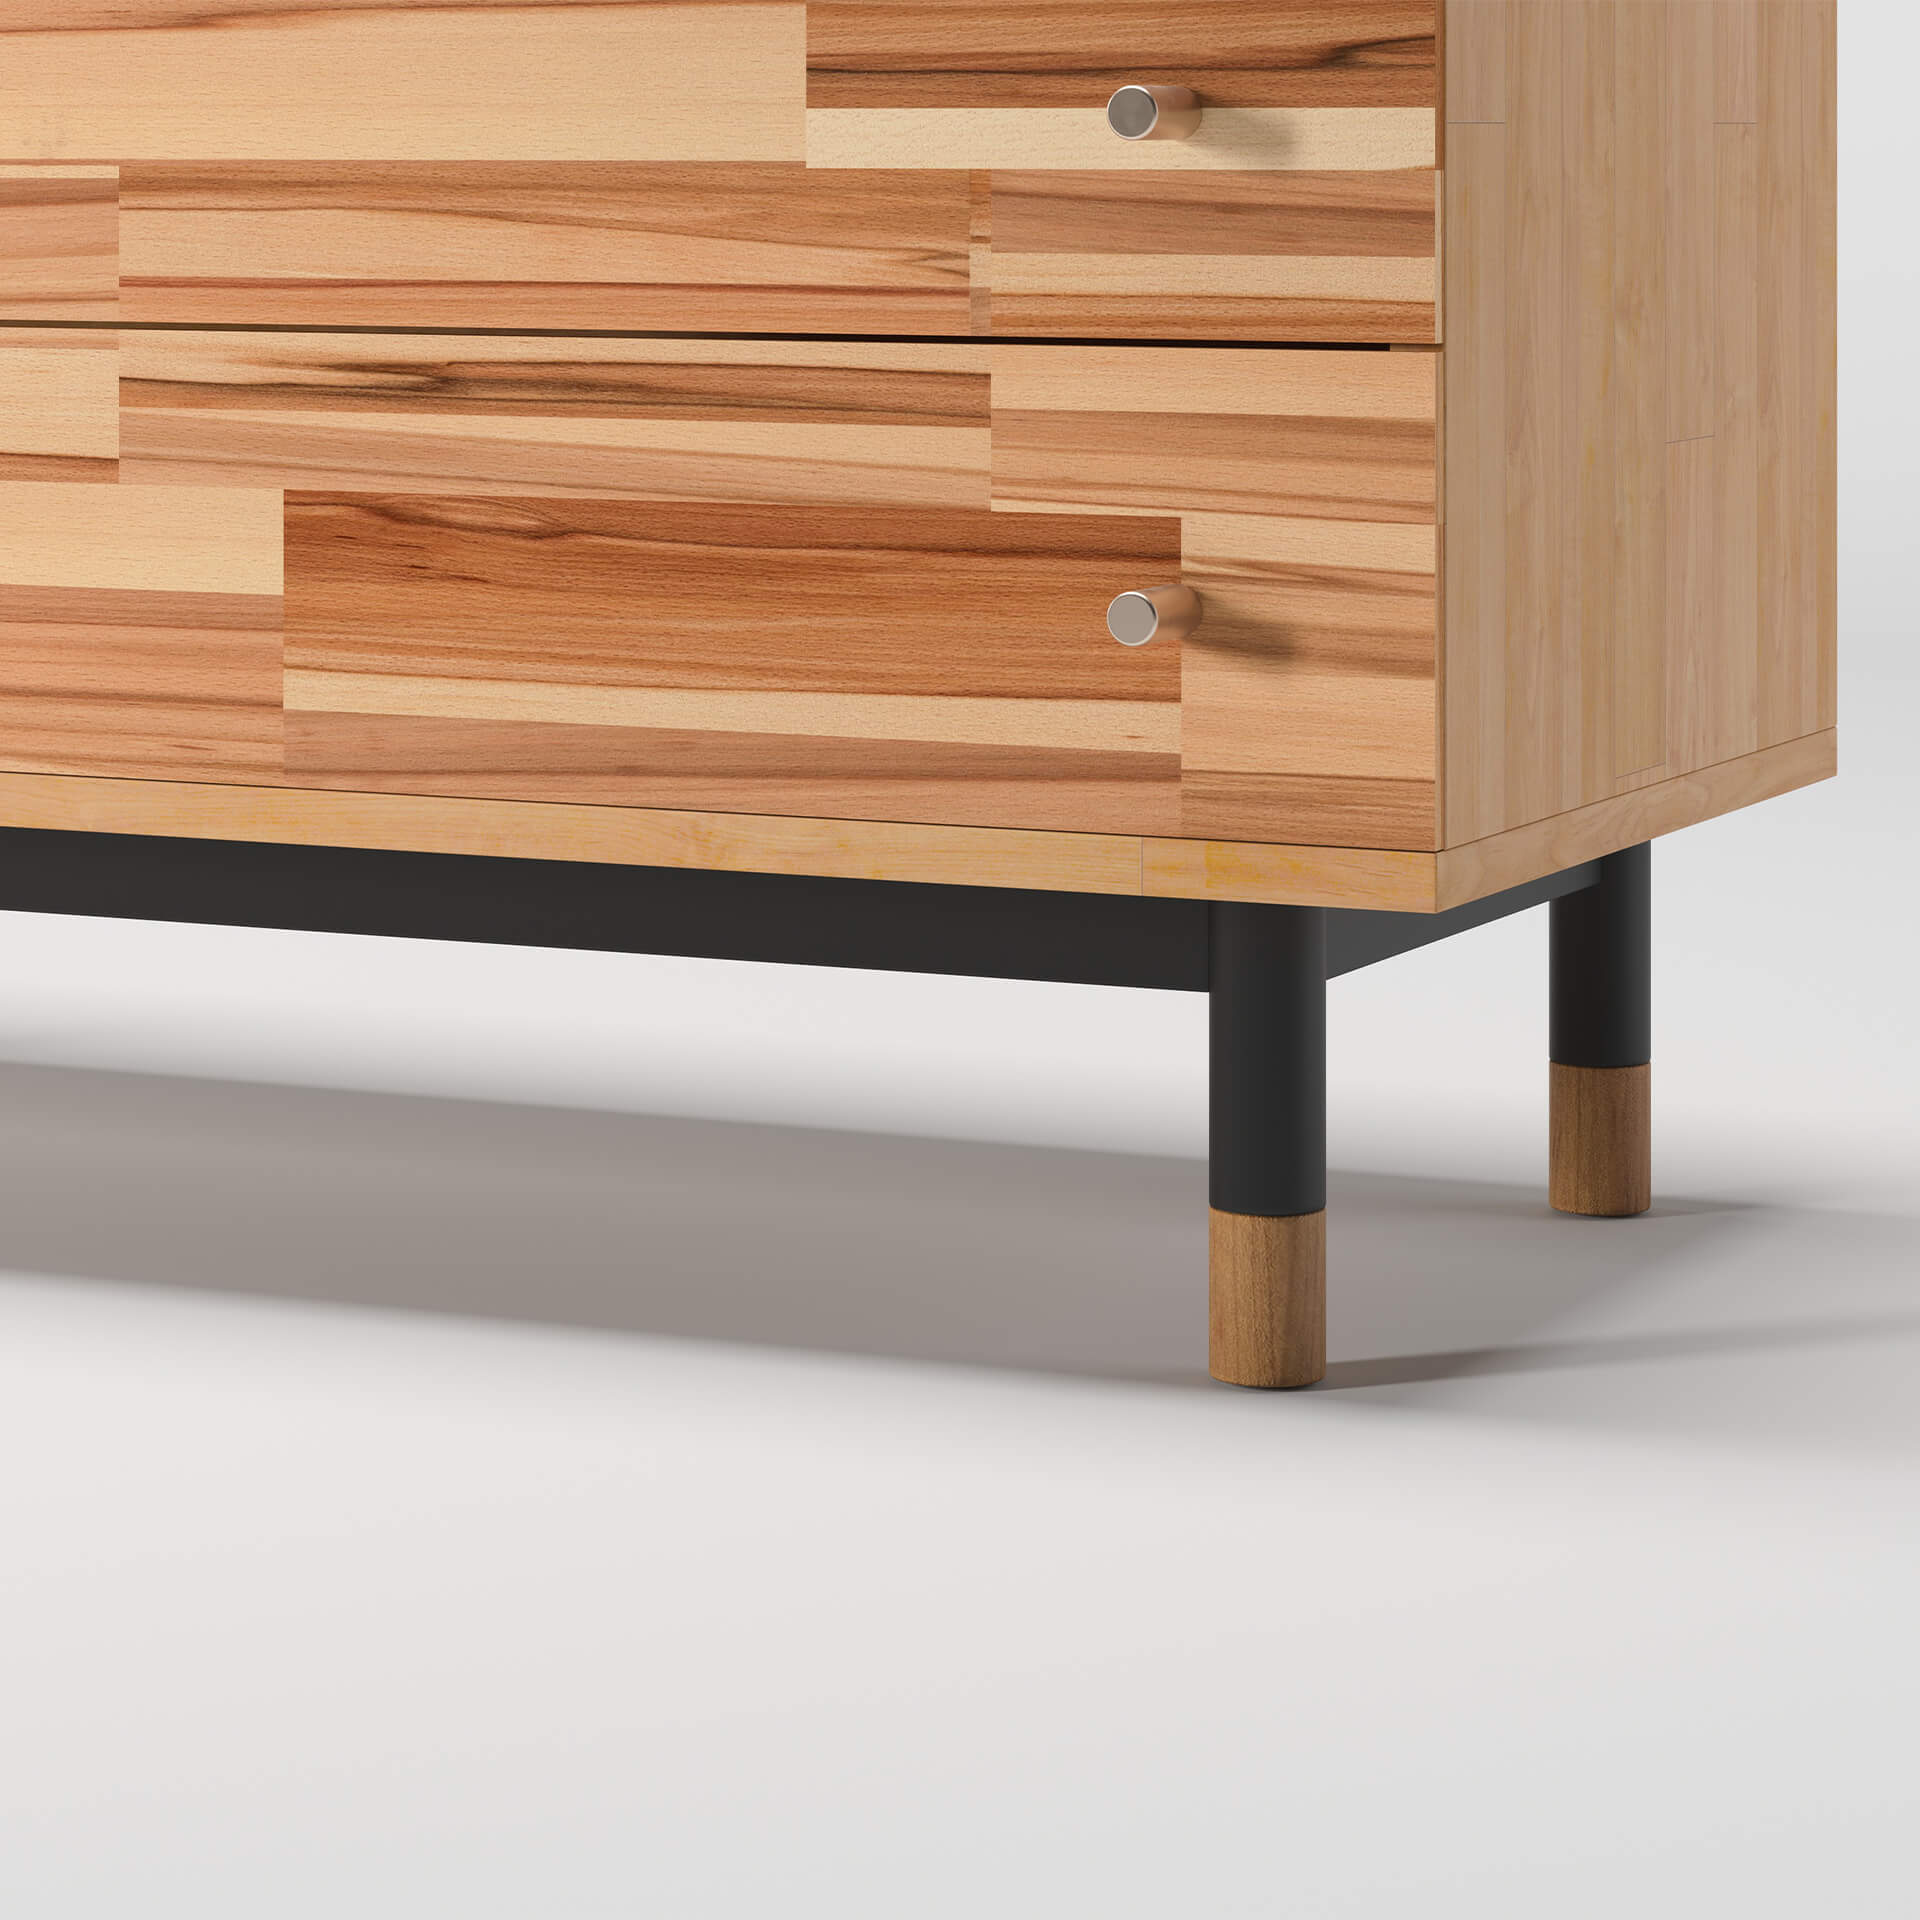 Close-Up 3D Render of Wooden Cabinet